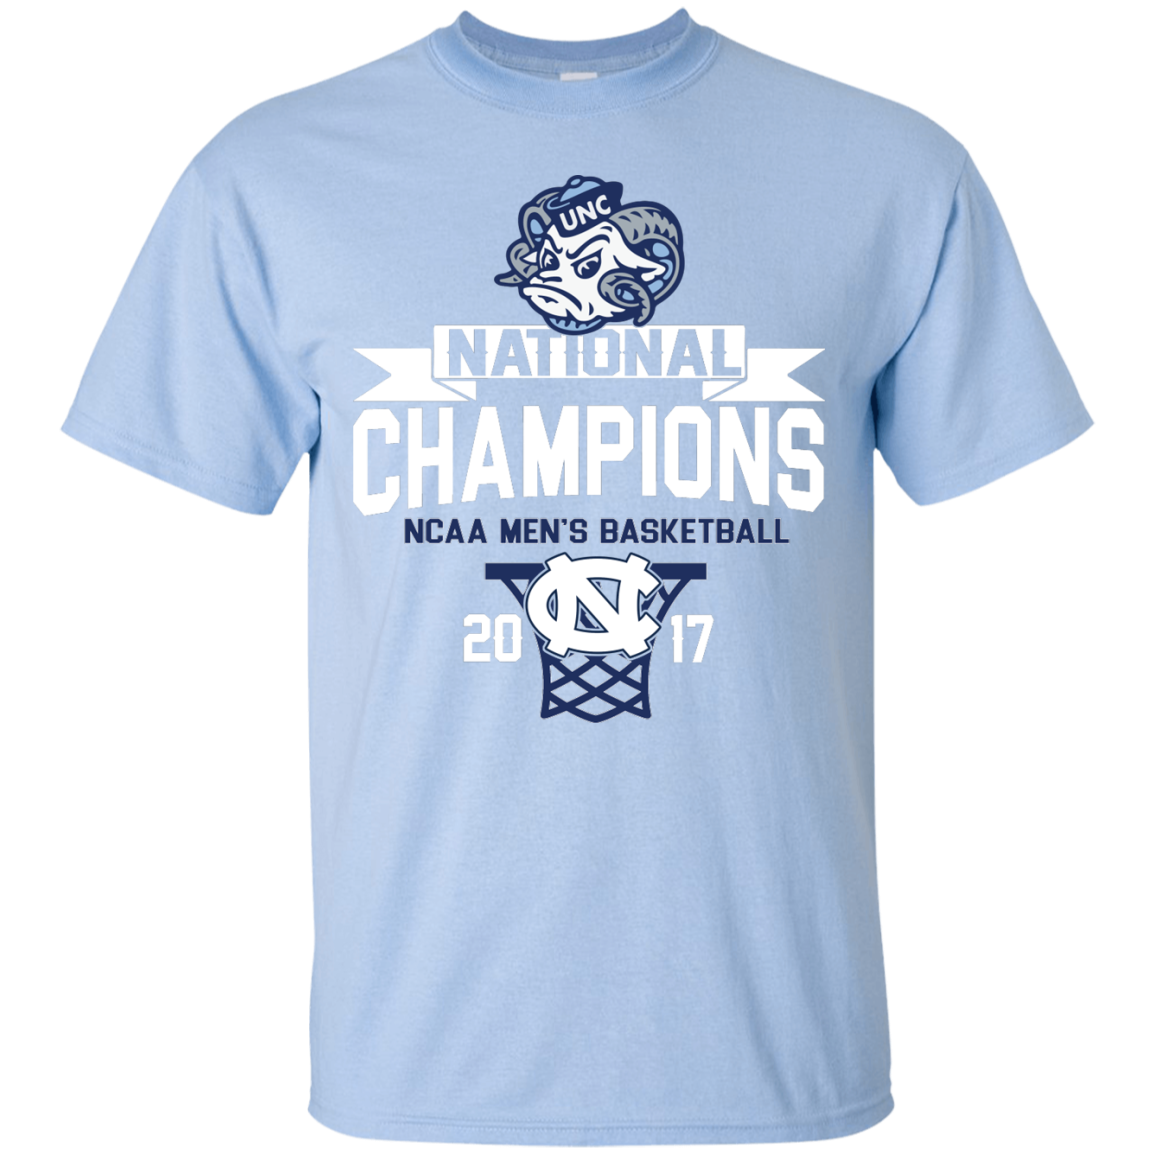 UNC Carolina Blue Basketball Shorts by Champion